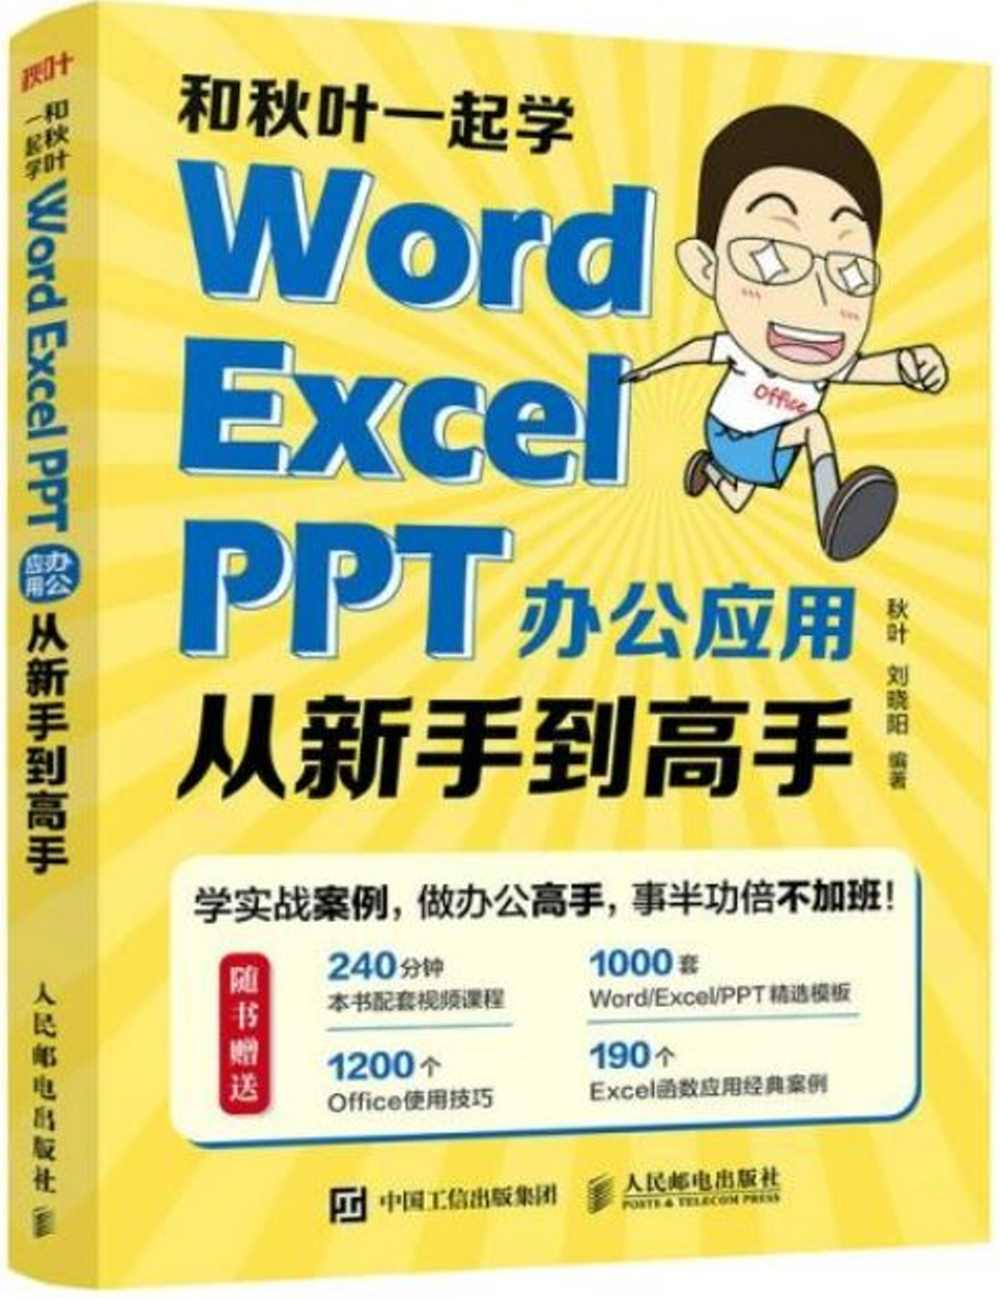 和秋葉一起學：Word Excel PPT辦公應用從新手到高手